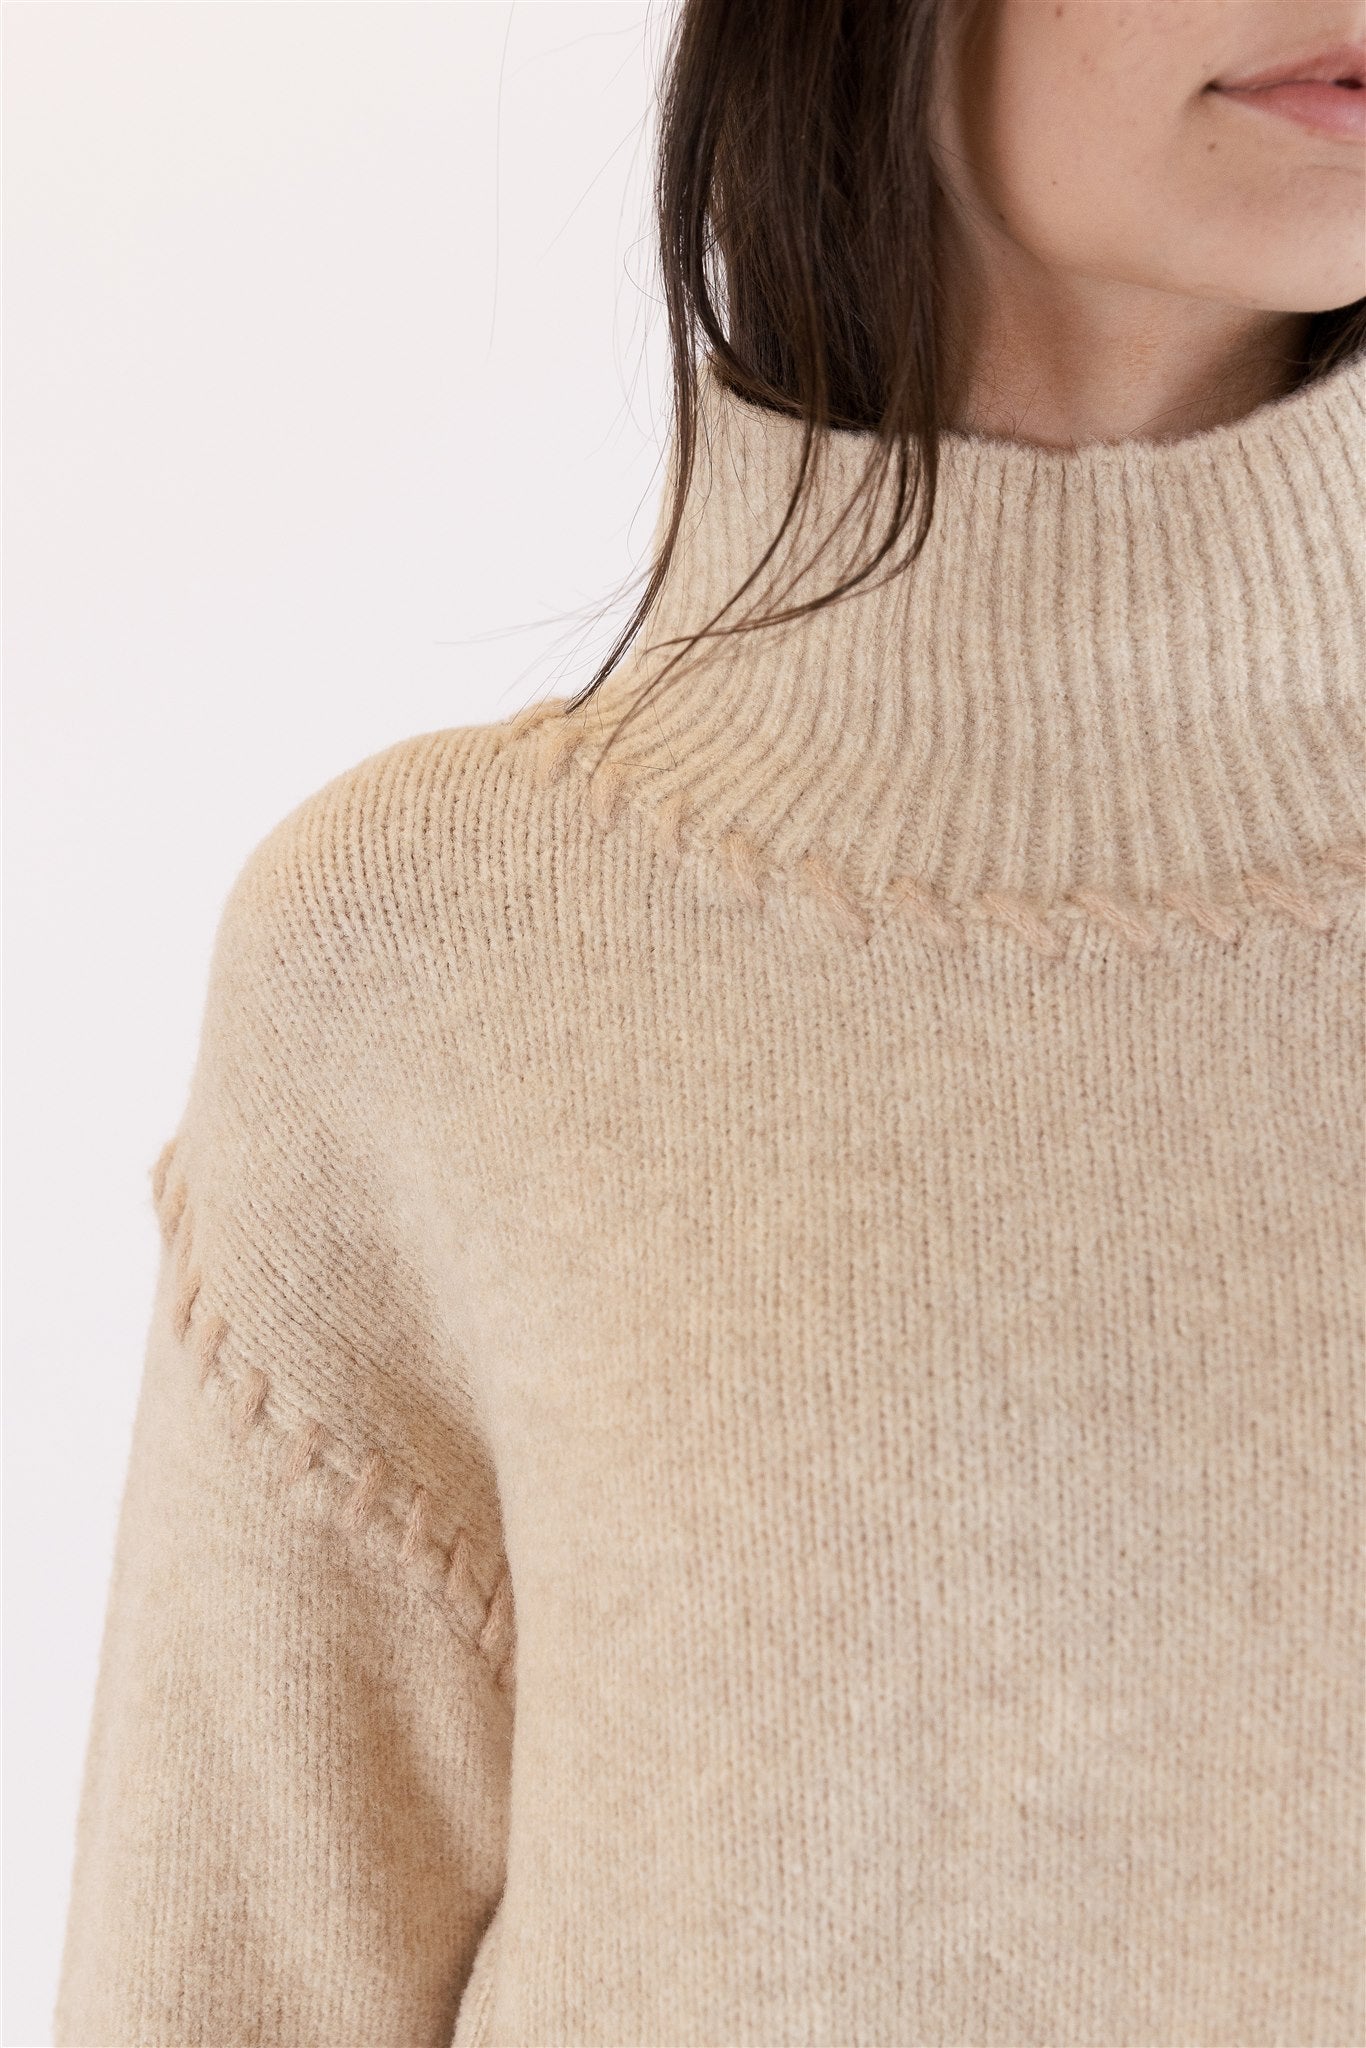 Lyla+Luxe Top - Stitch Sweater - Oats